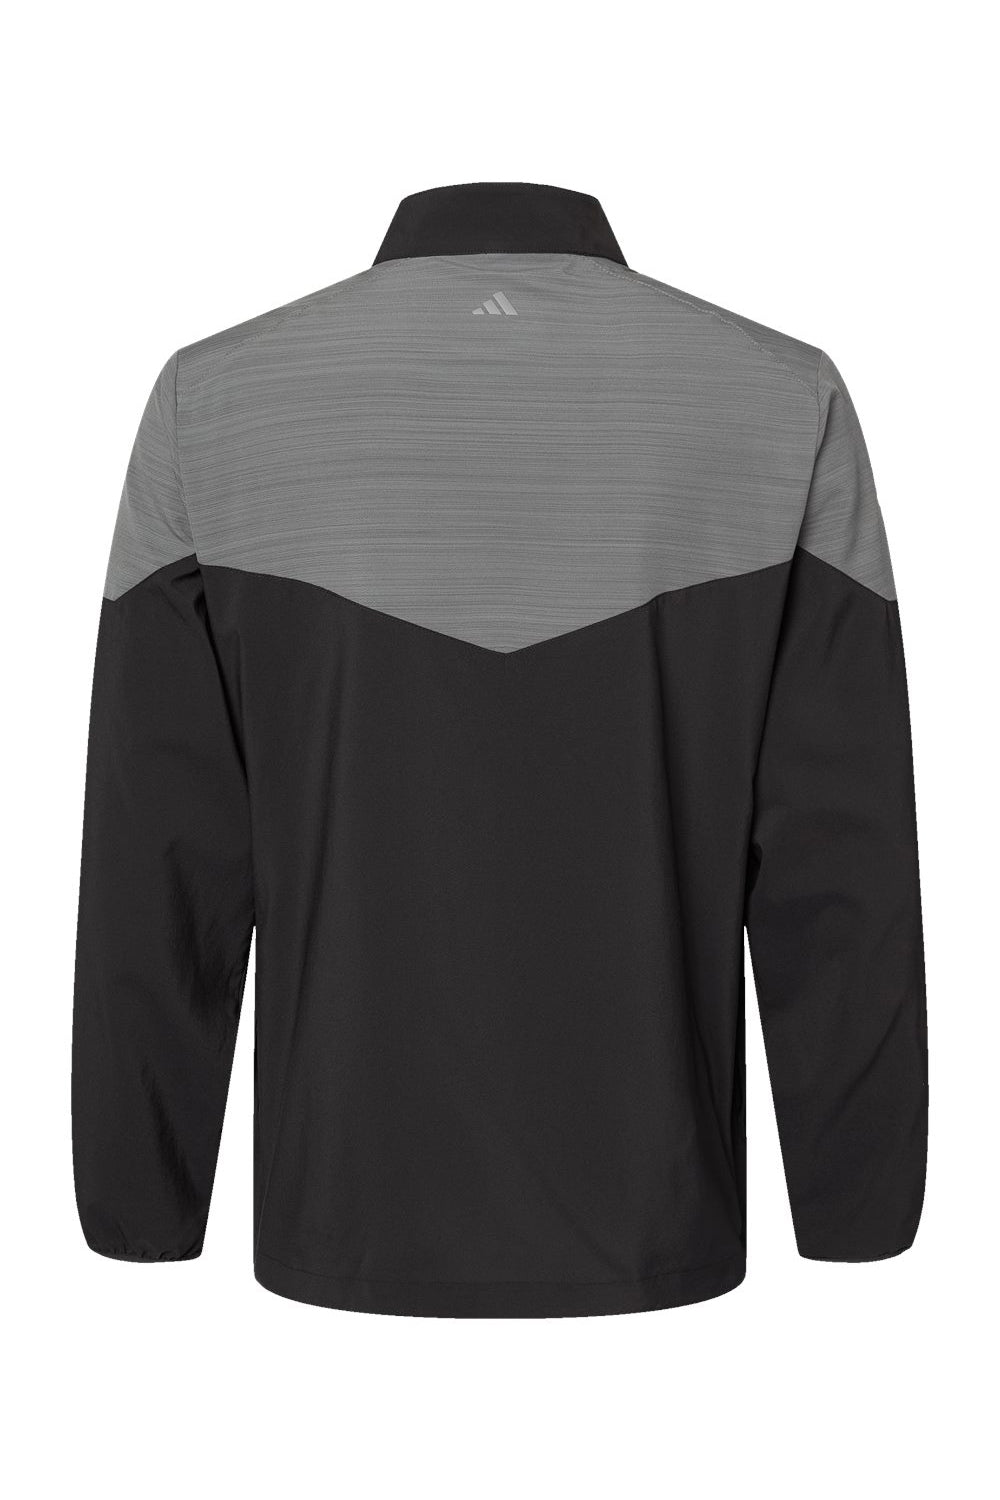 Adidas A546 Mens Chevron Water Resistant 1/4 Zip Windshirt Jacket Black/Heather Black Flat Back